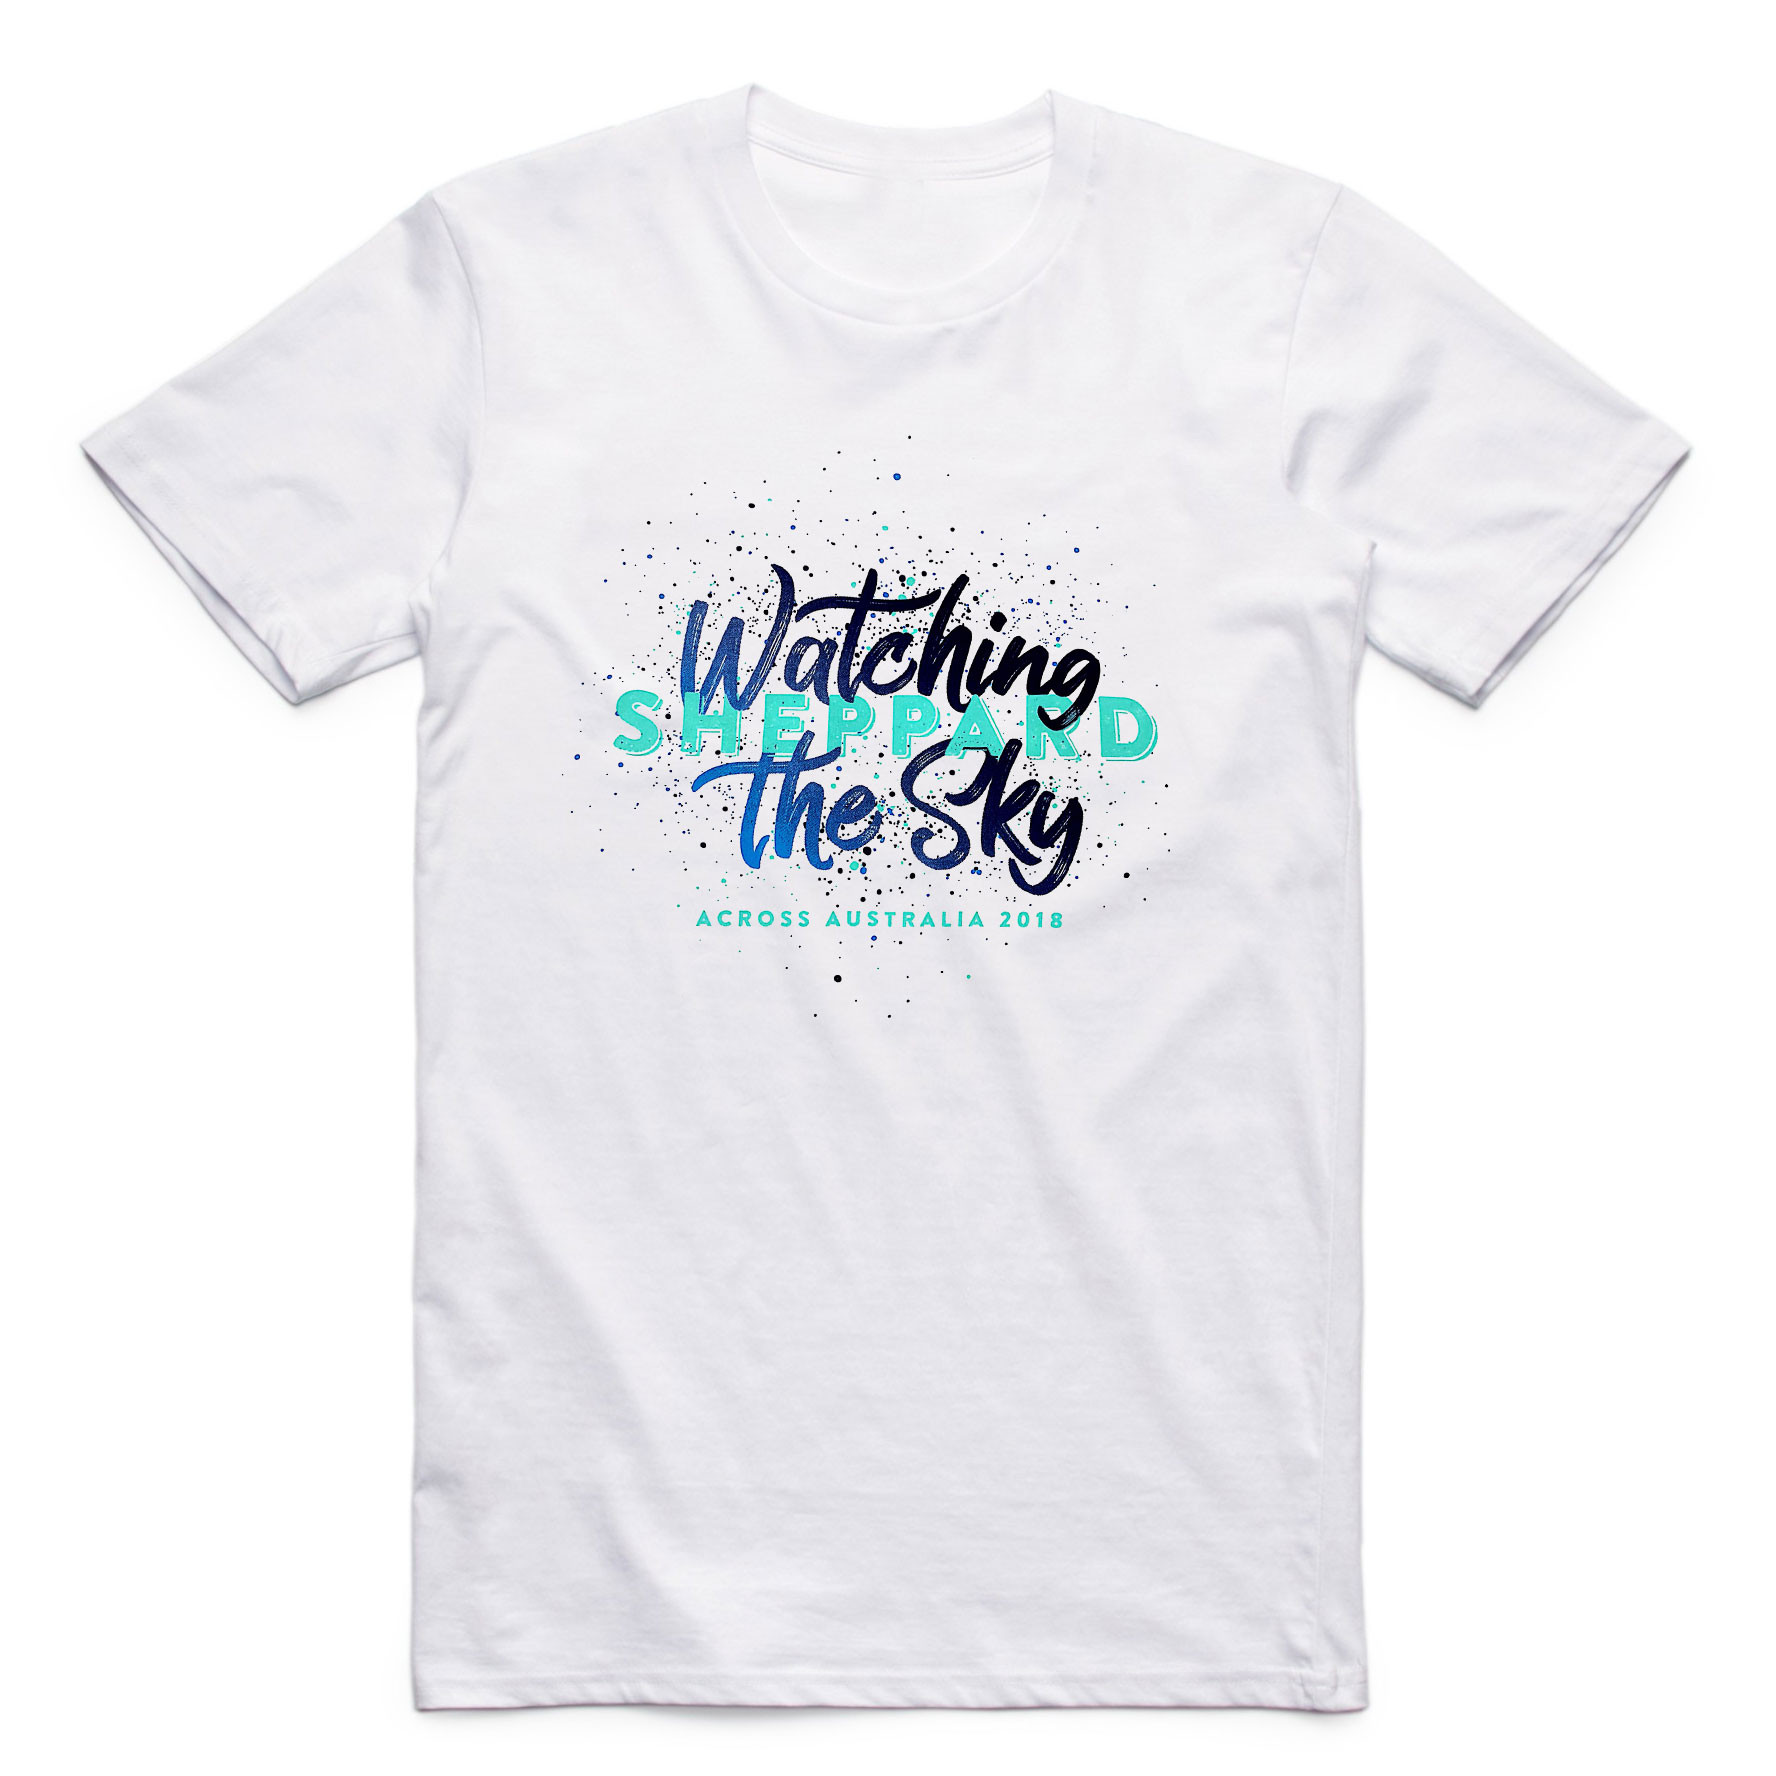 Sheppard - Watching The Sky Tour Tee